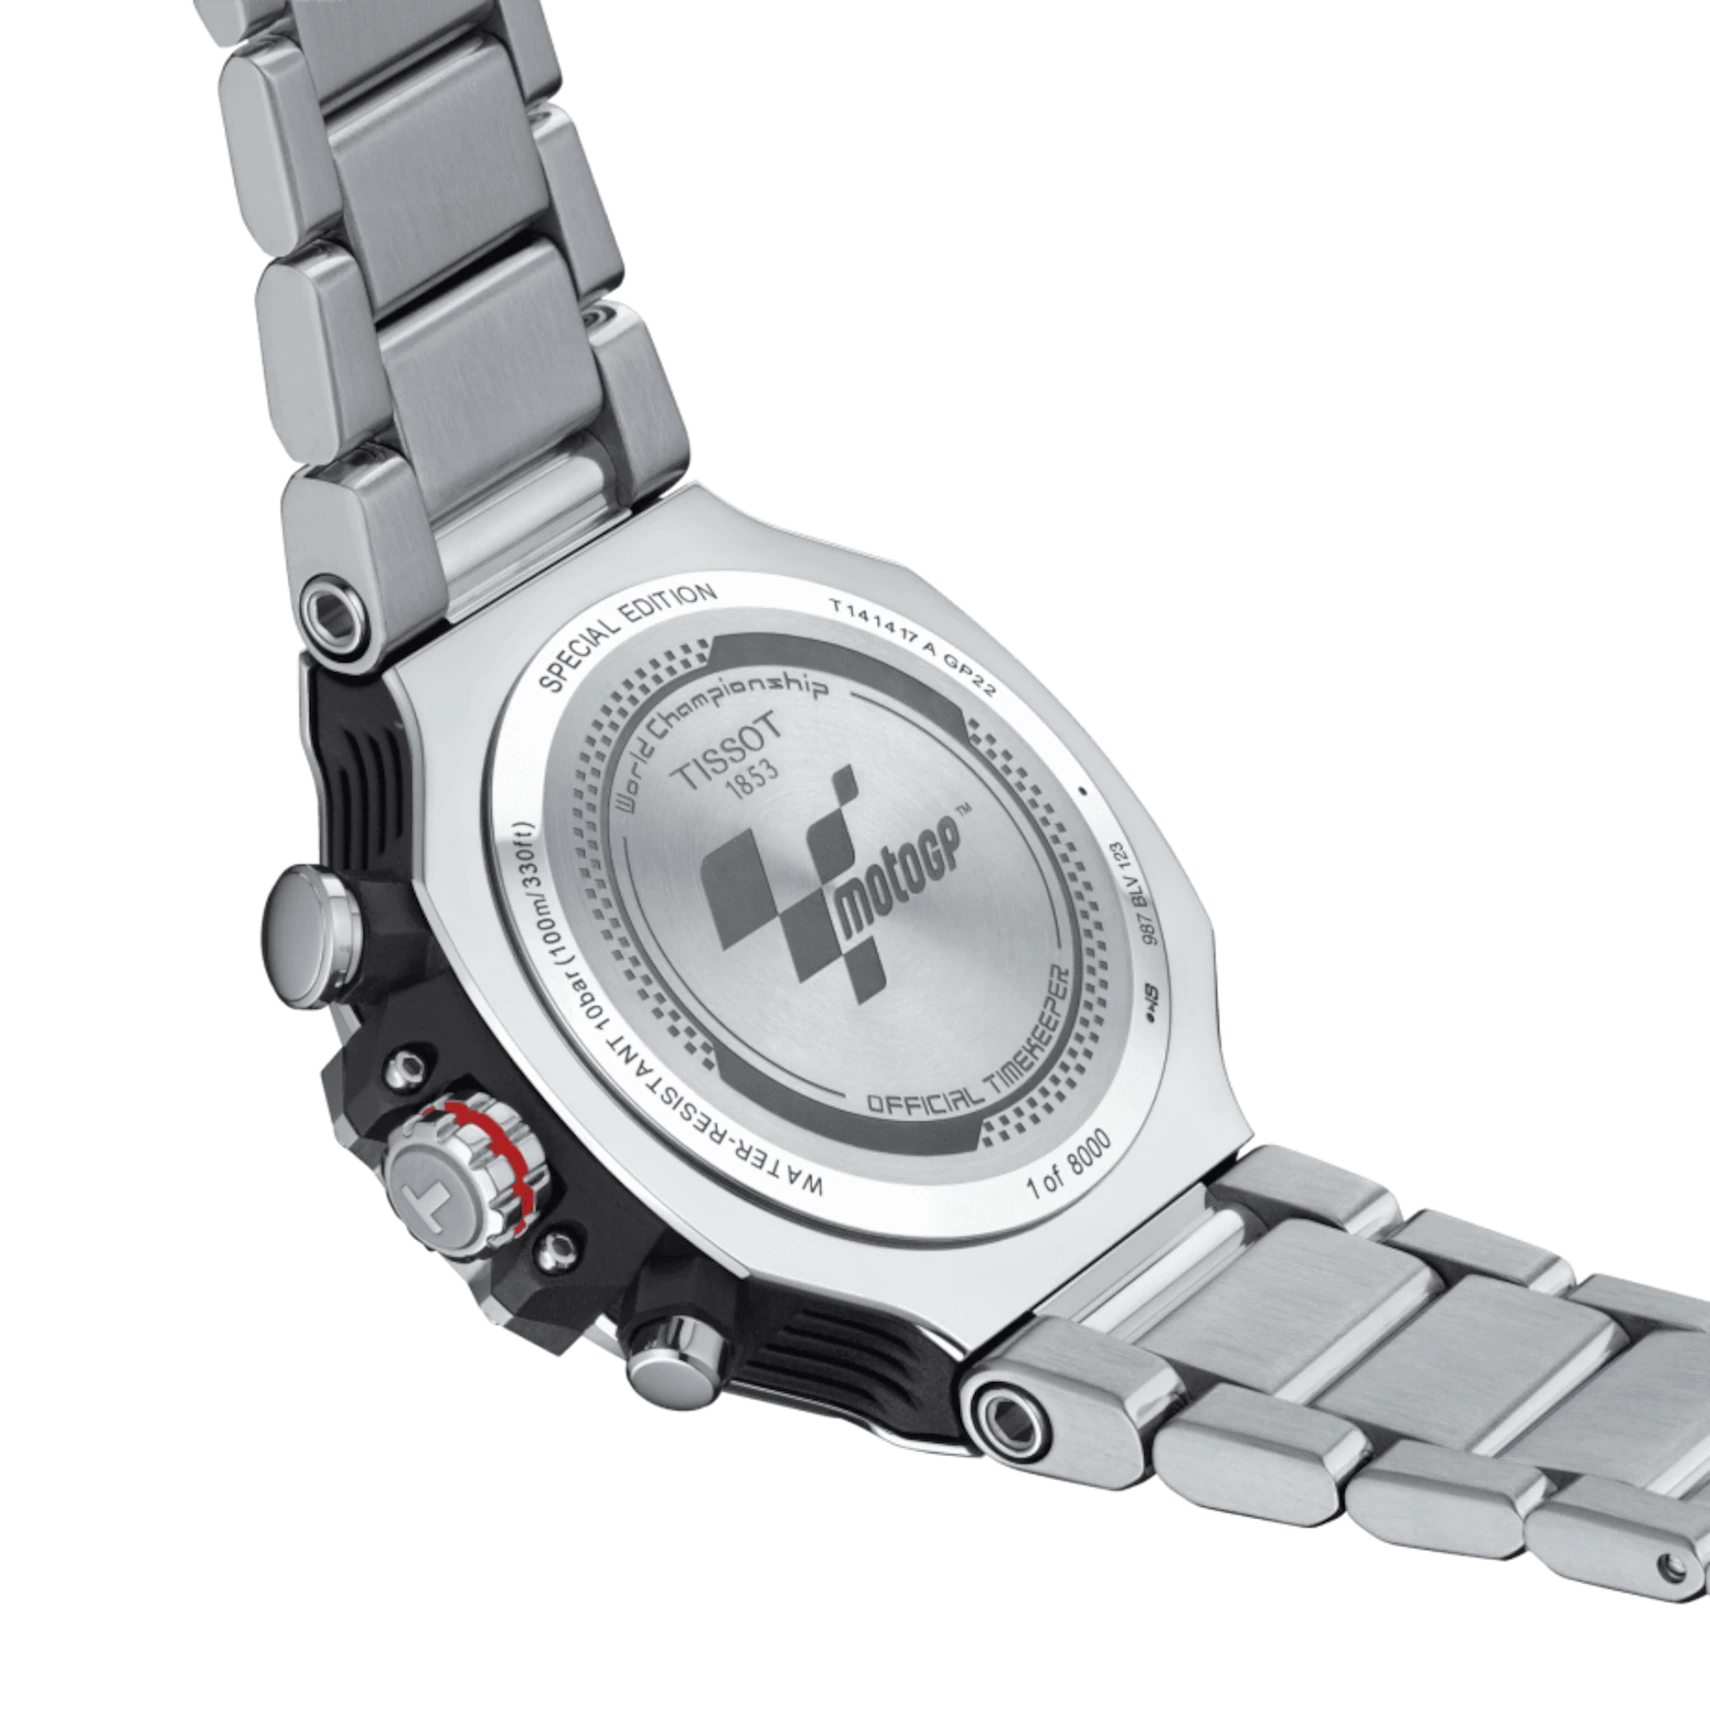 Tissot Watch T-Race MotoGP Chronograph Limited Edition 45mm